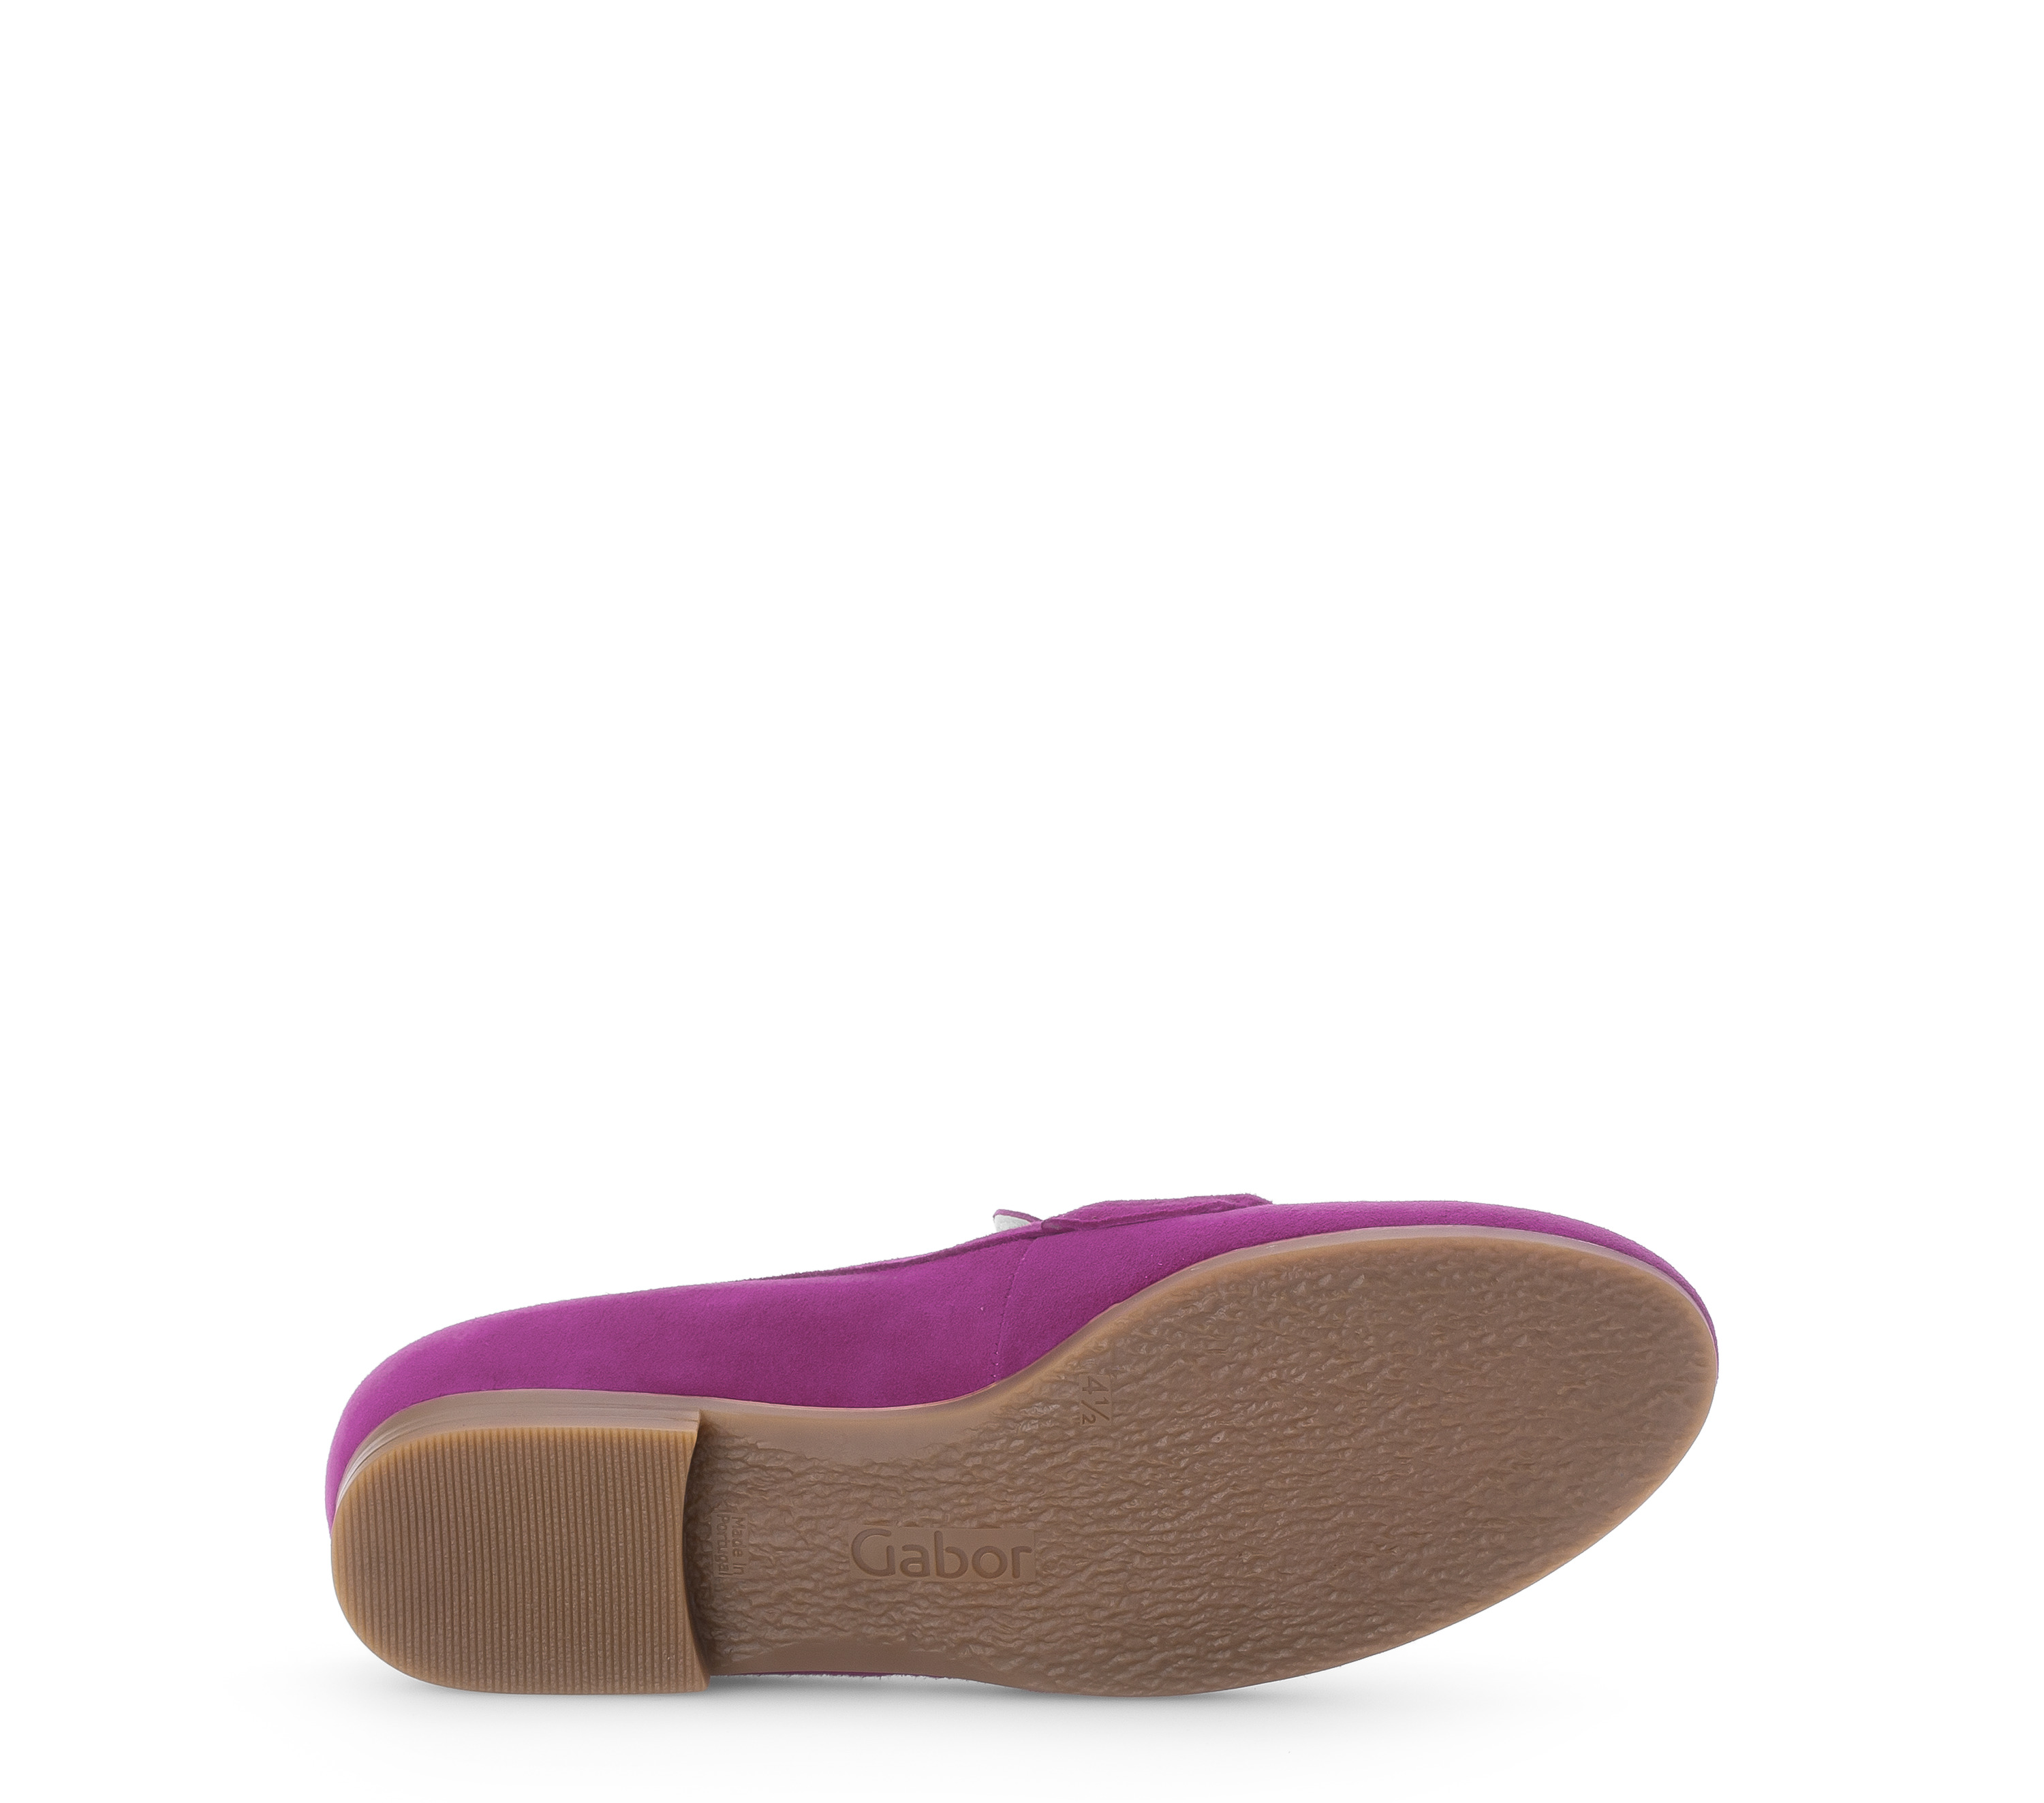 Gabor Shoes Slipper - Orchid Leder